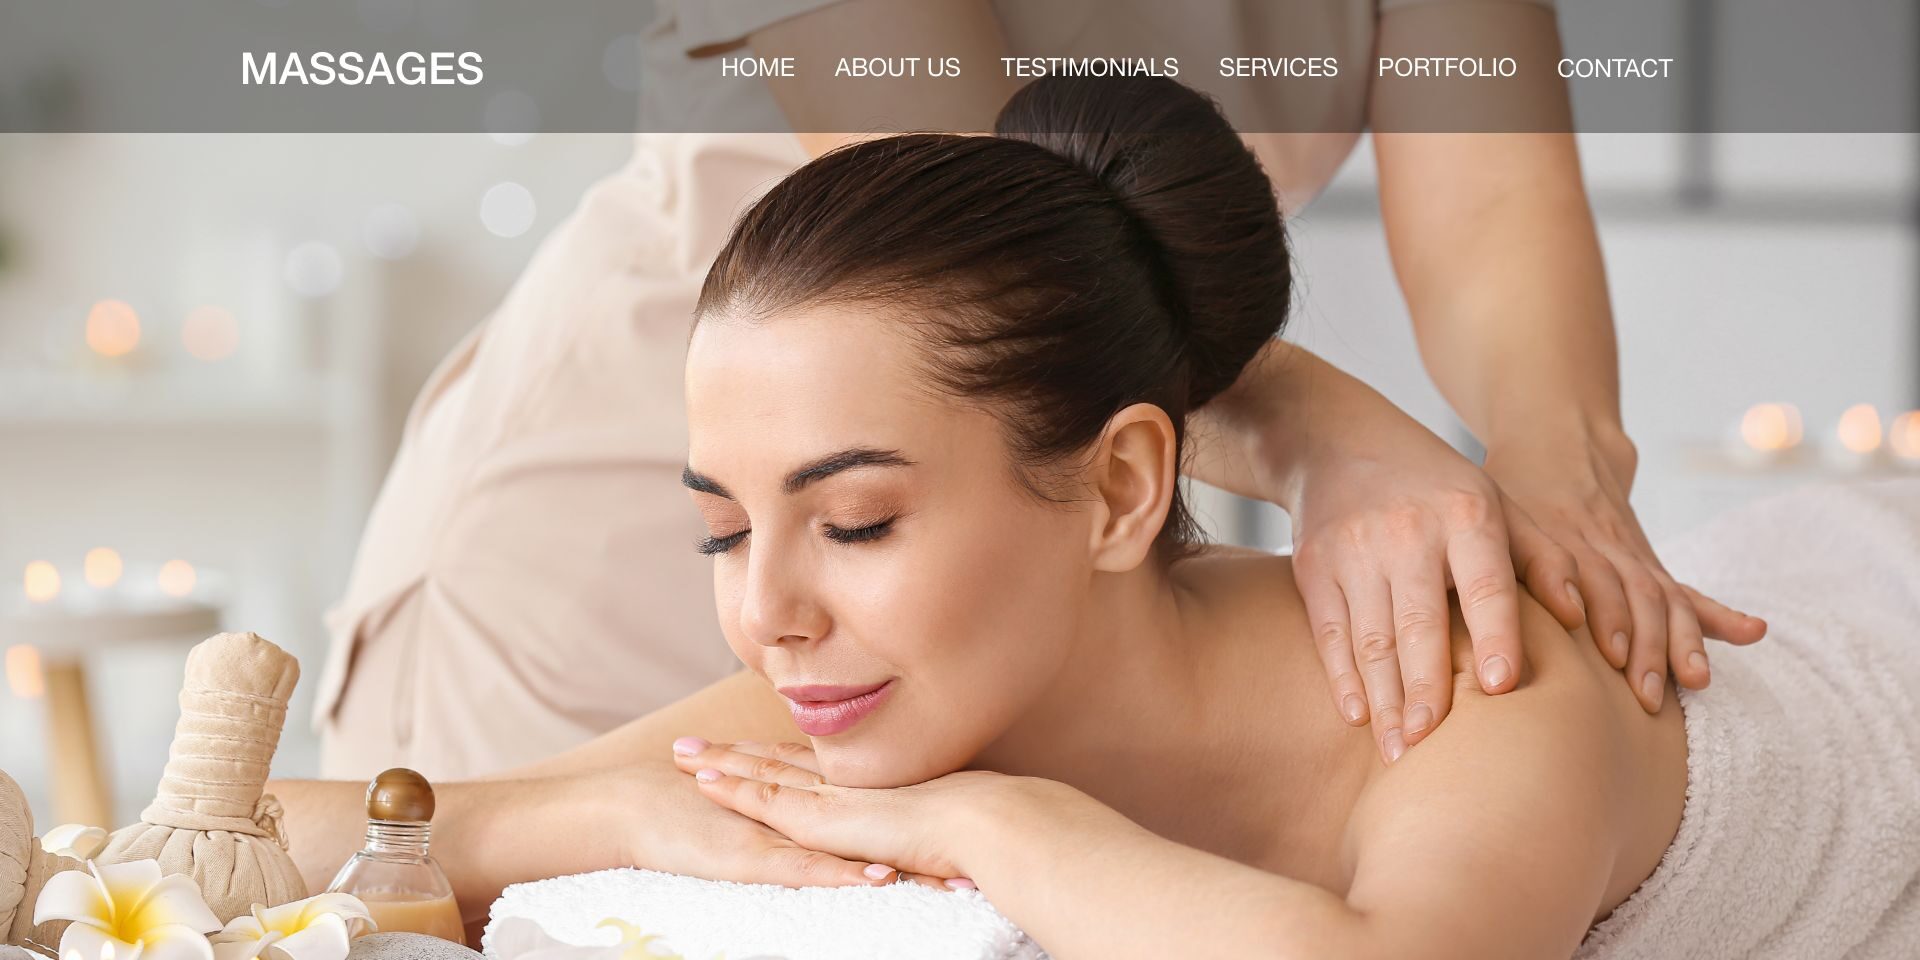 Massage Service Website Design